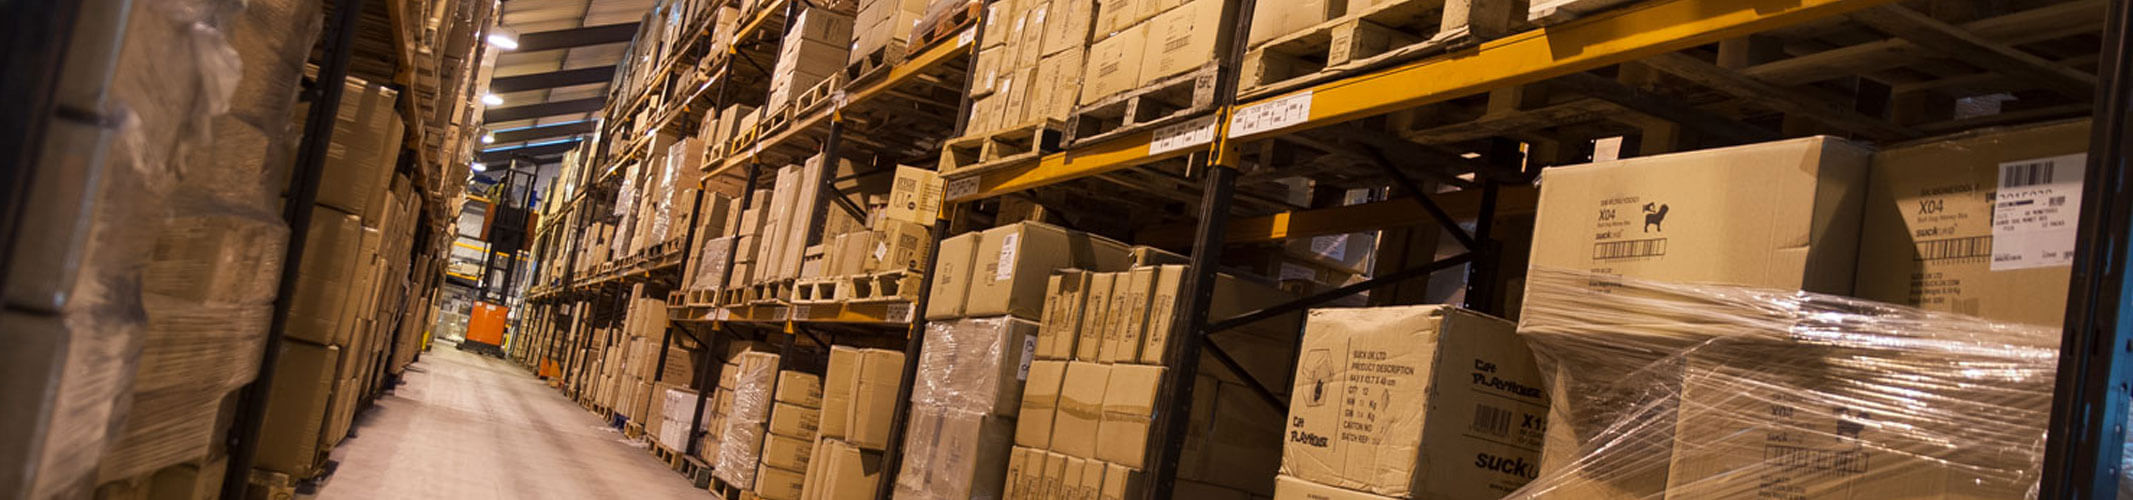 trade counter distribution warehouse aisle